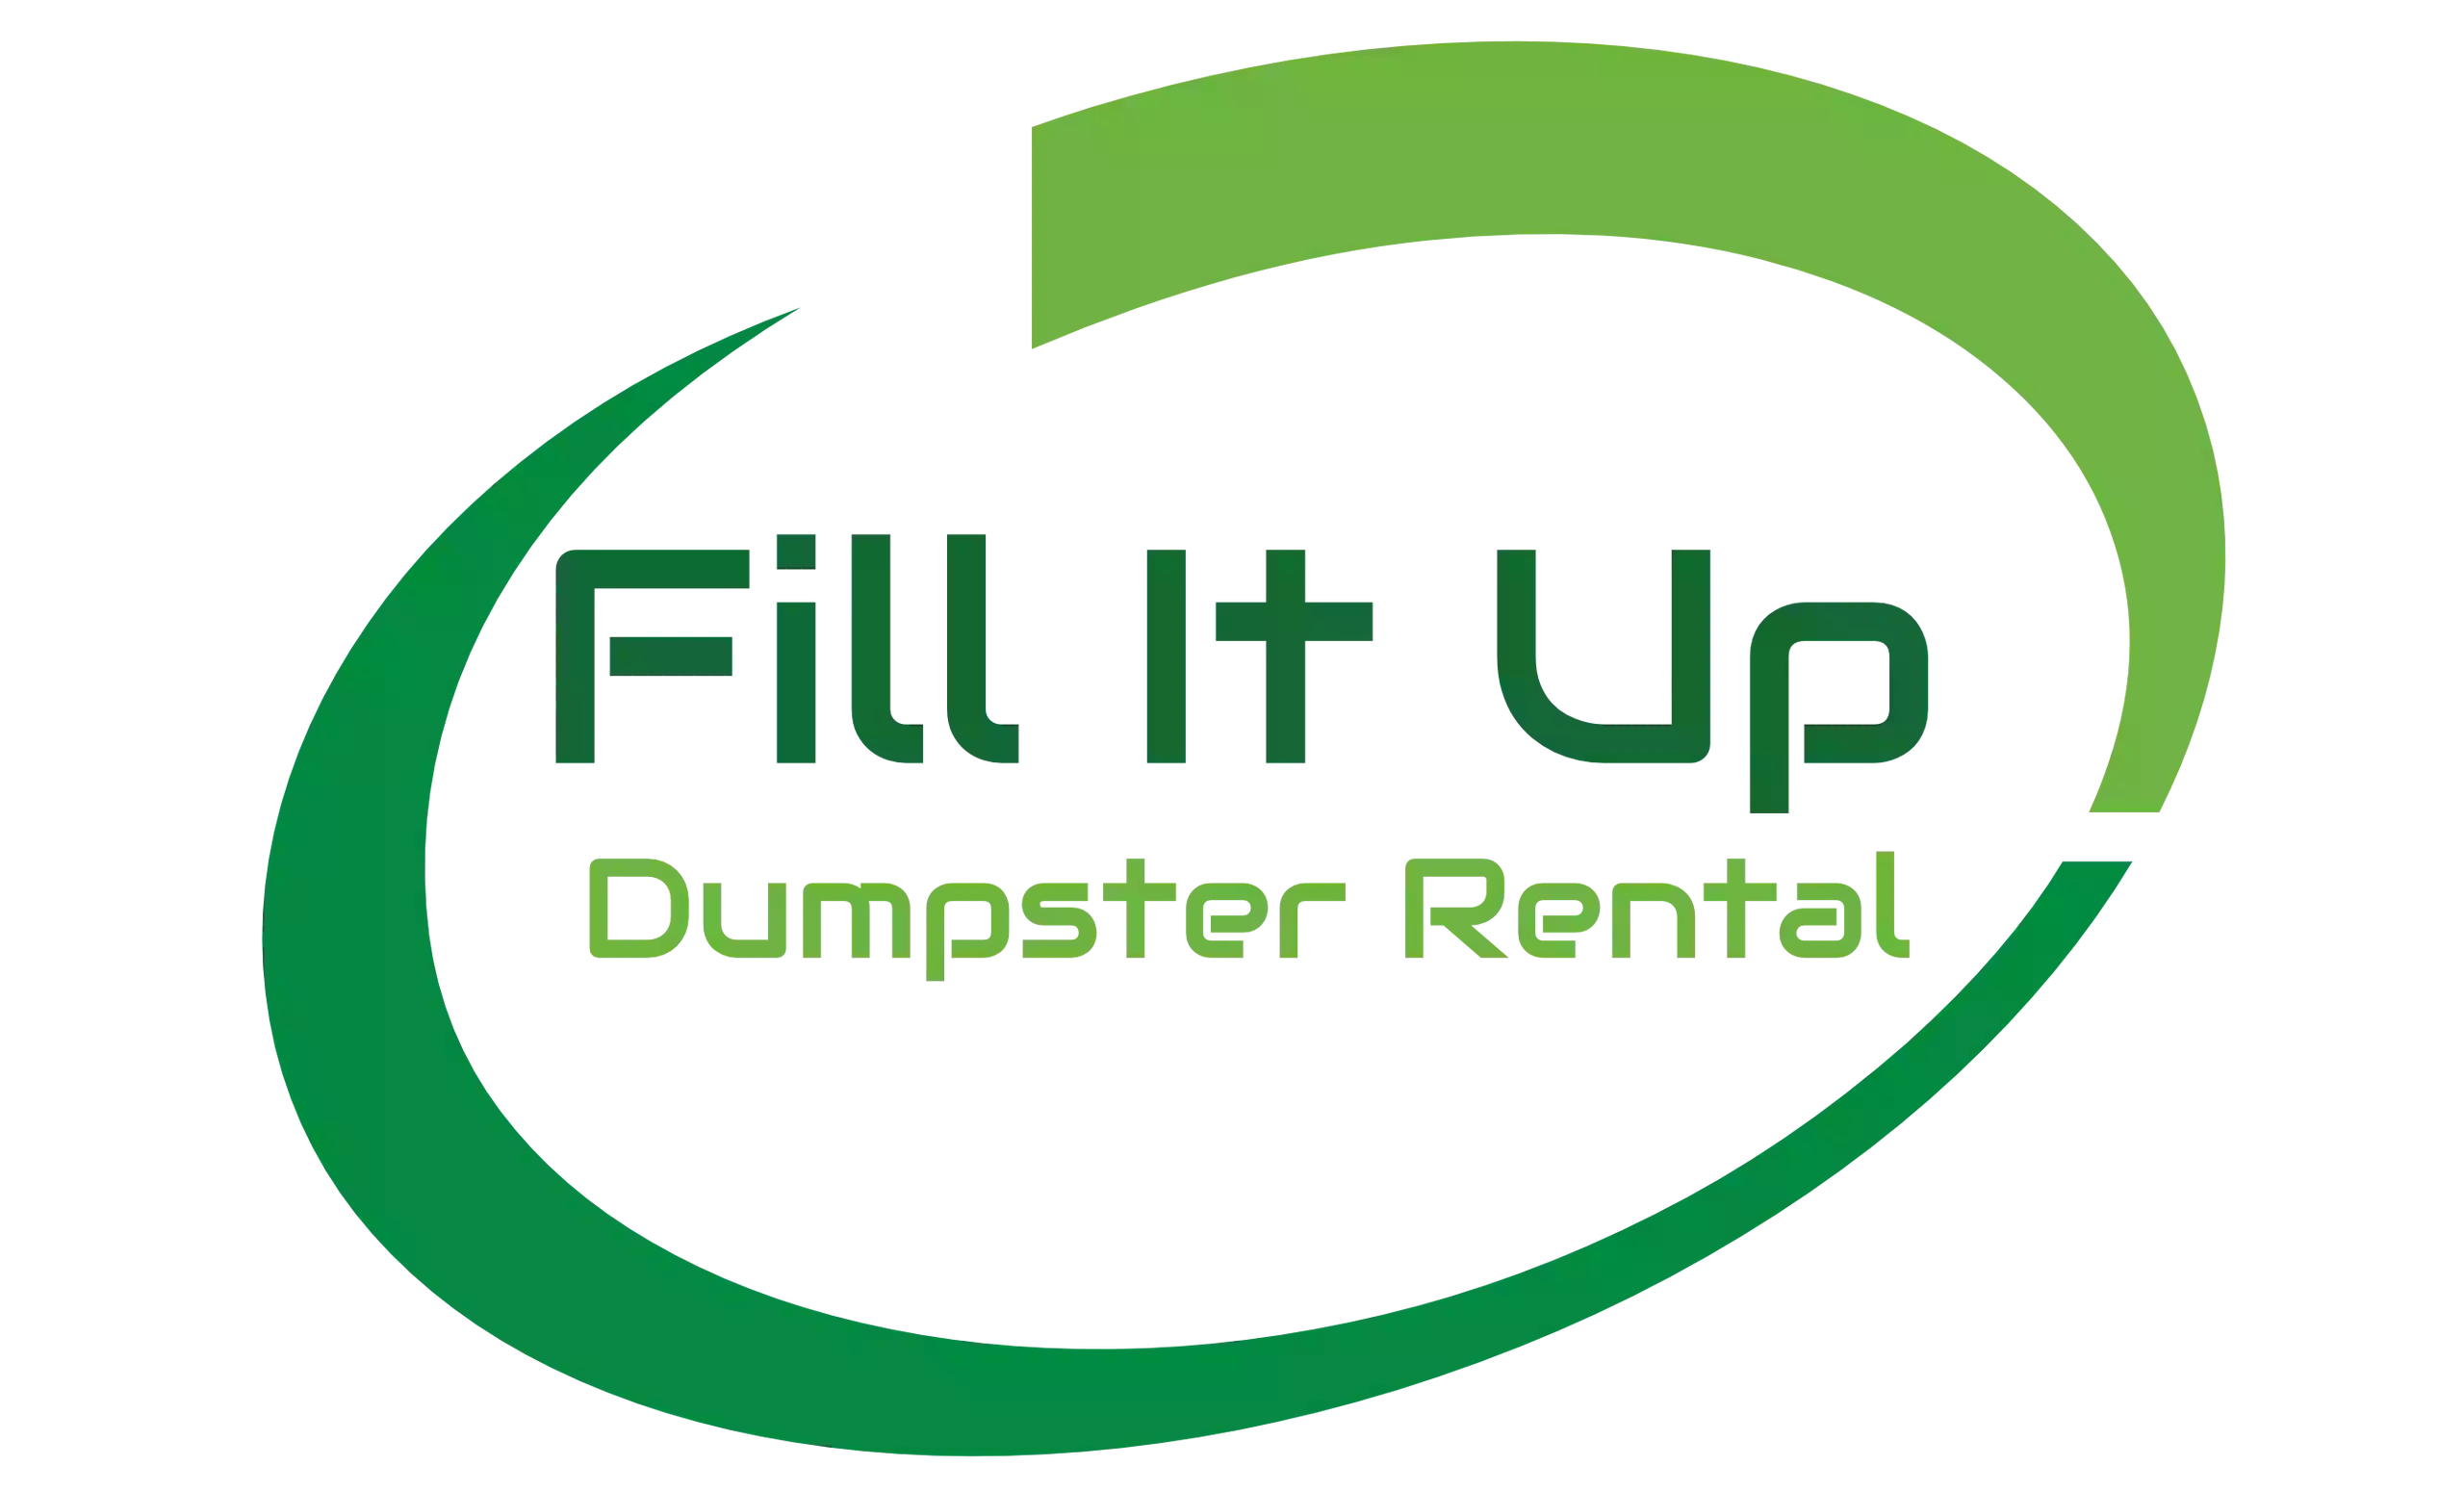 Fill It Up Dumpster Rental Rolloff